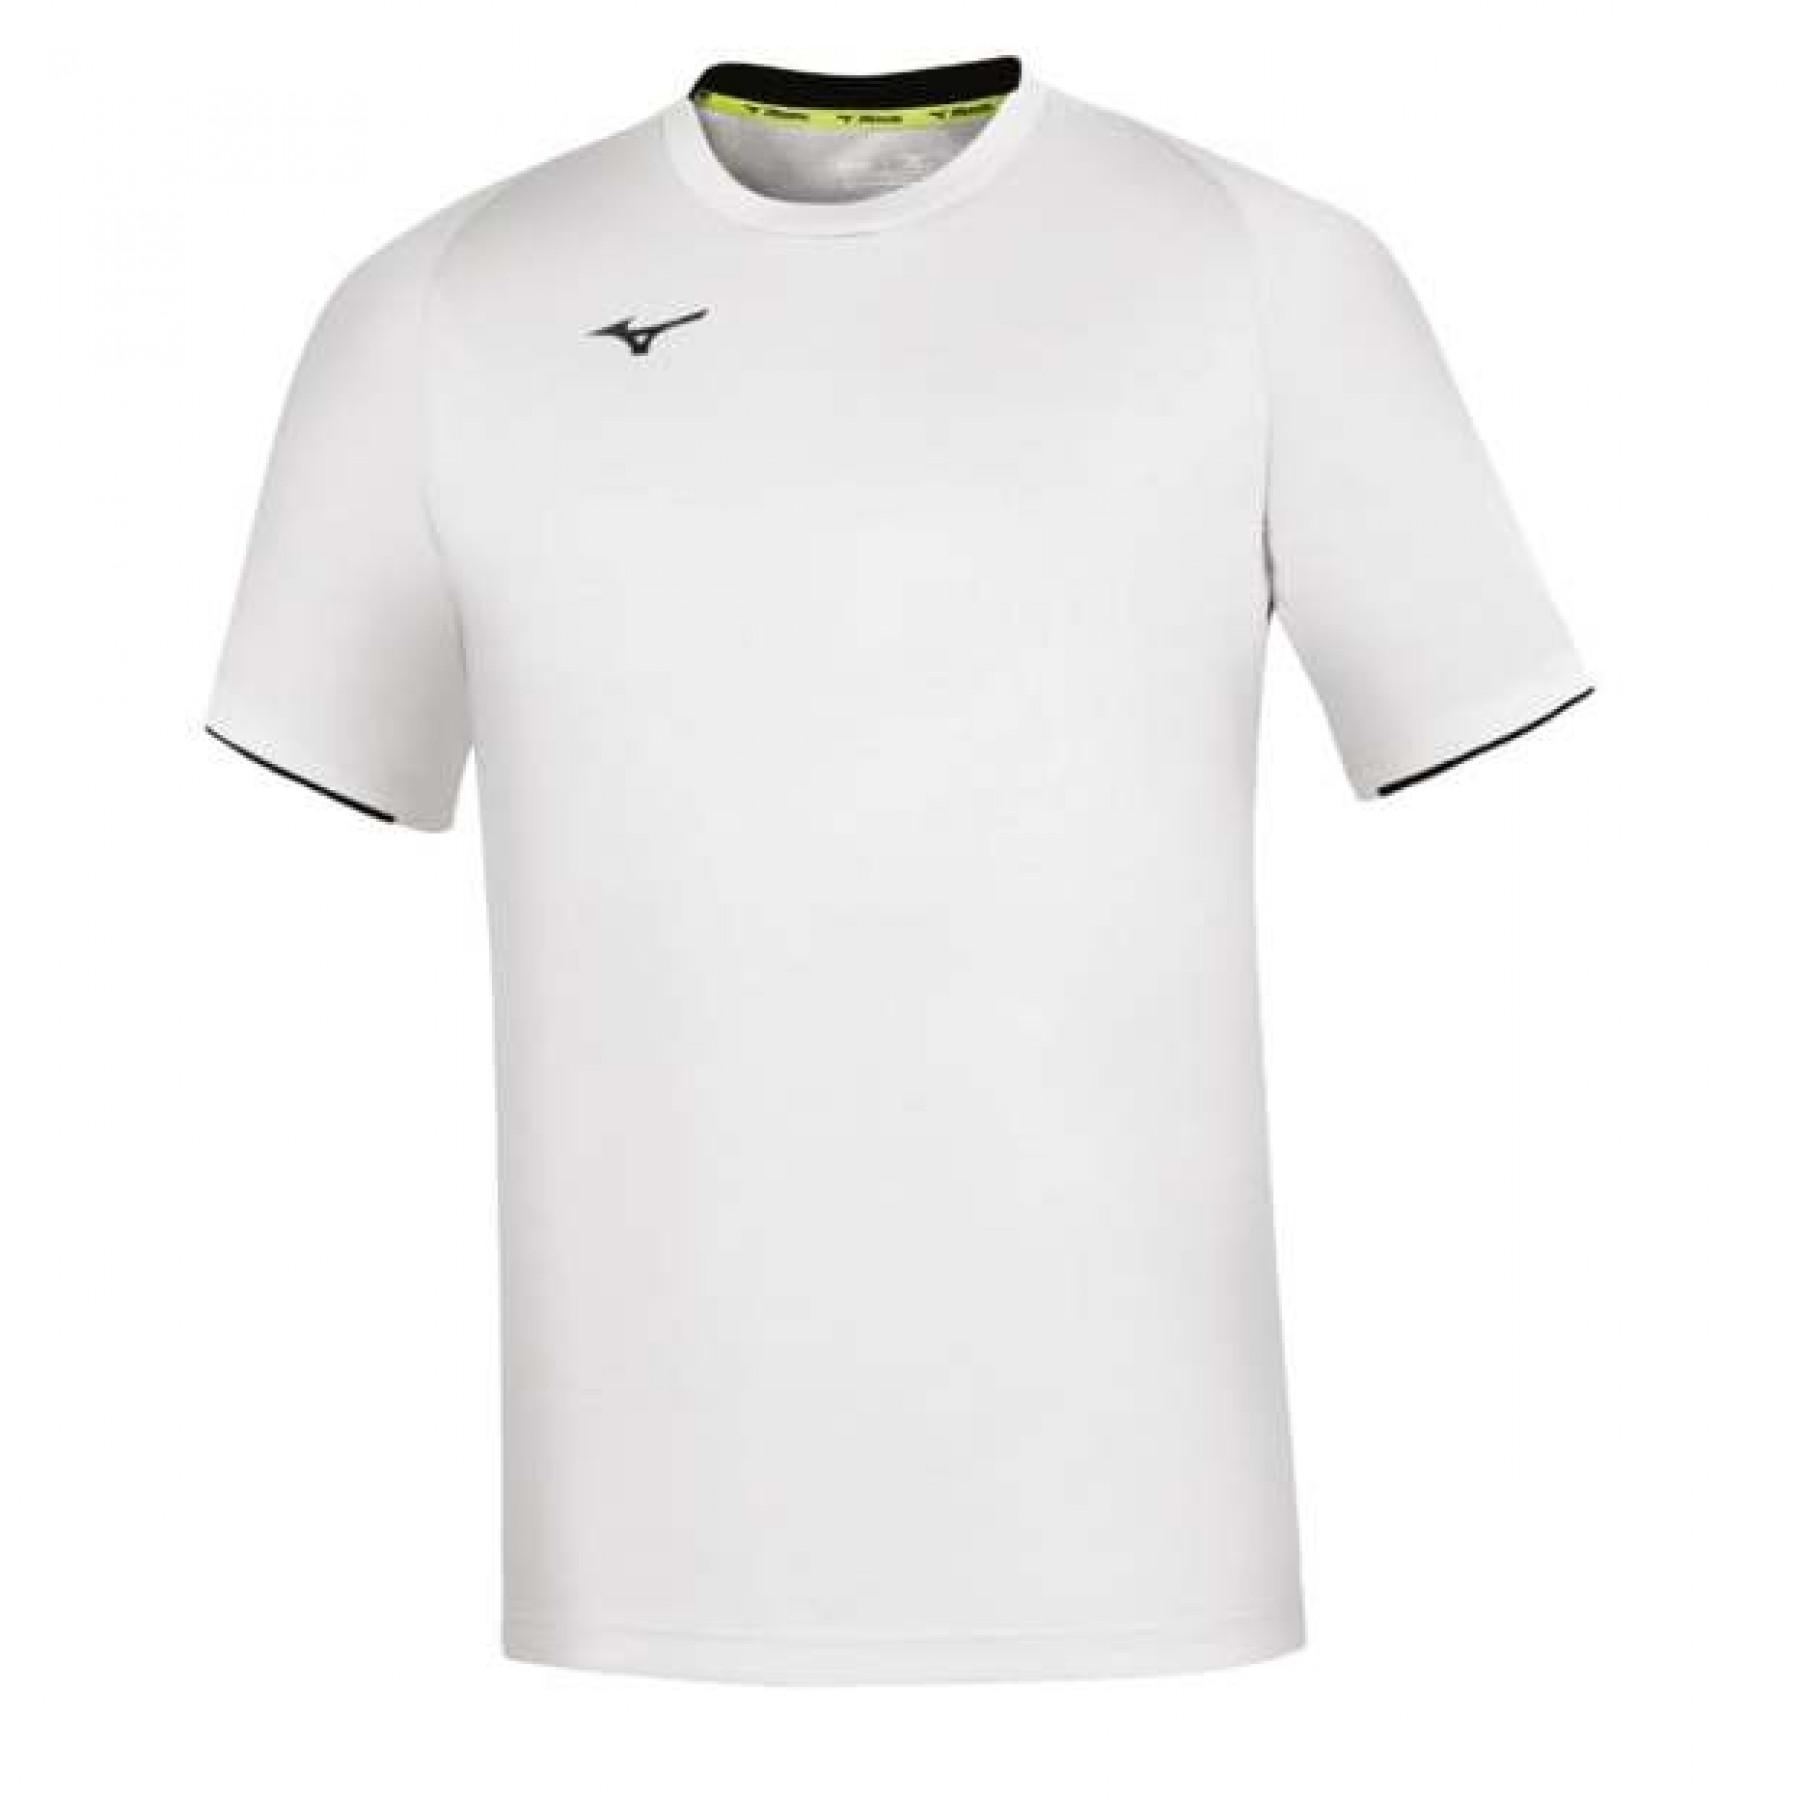 Koel Slecht Om toevlucht te zoeken T-shirt Mizuno Core - T-shirts and polos - Textile - Handball wear